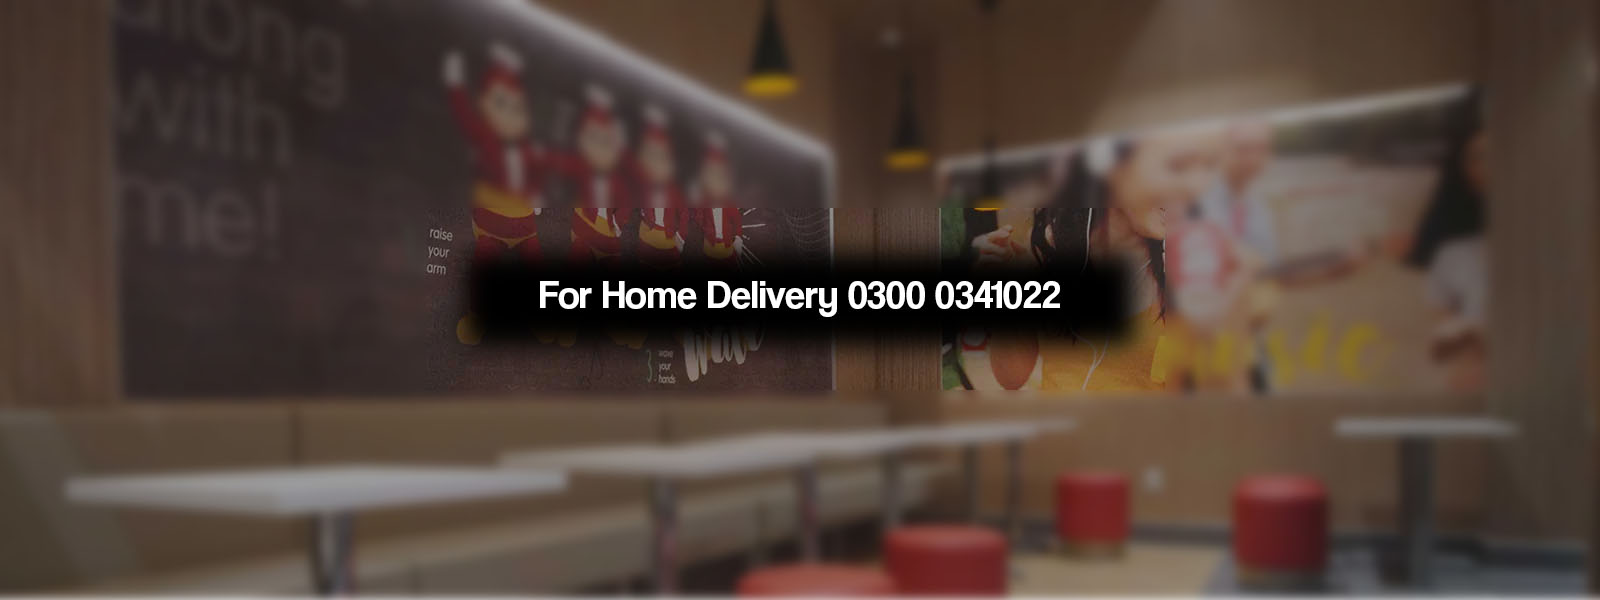 pizza-school-3-farhan-chowk-satiana-road-faisalabad-to-order-call-0300-0341022